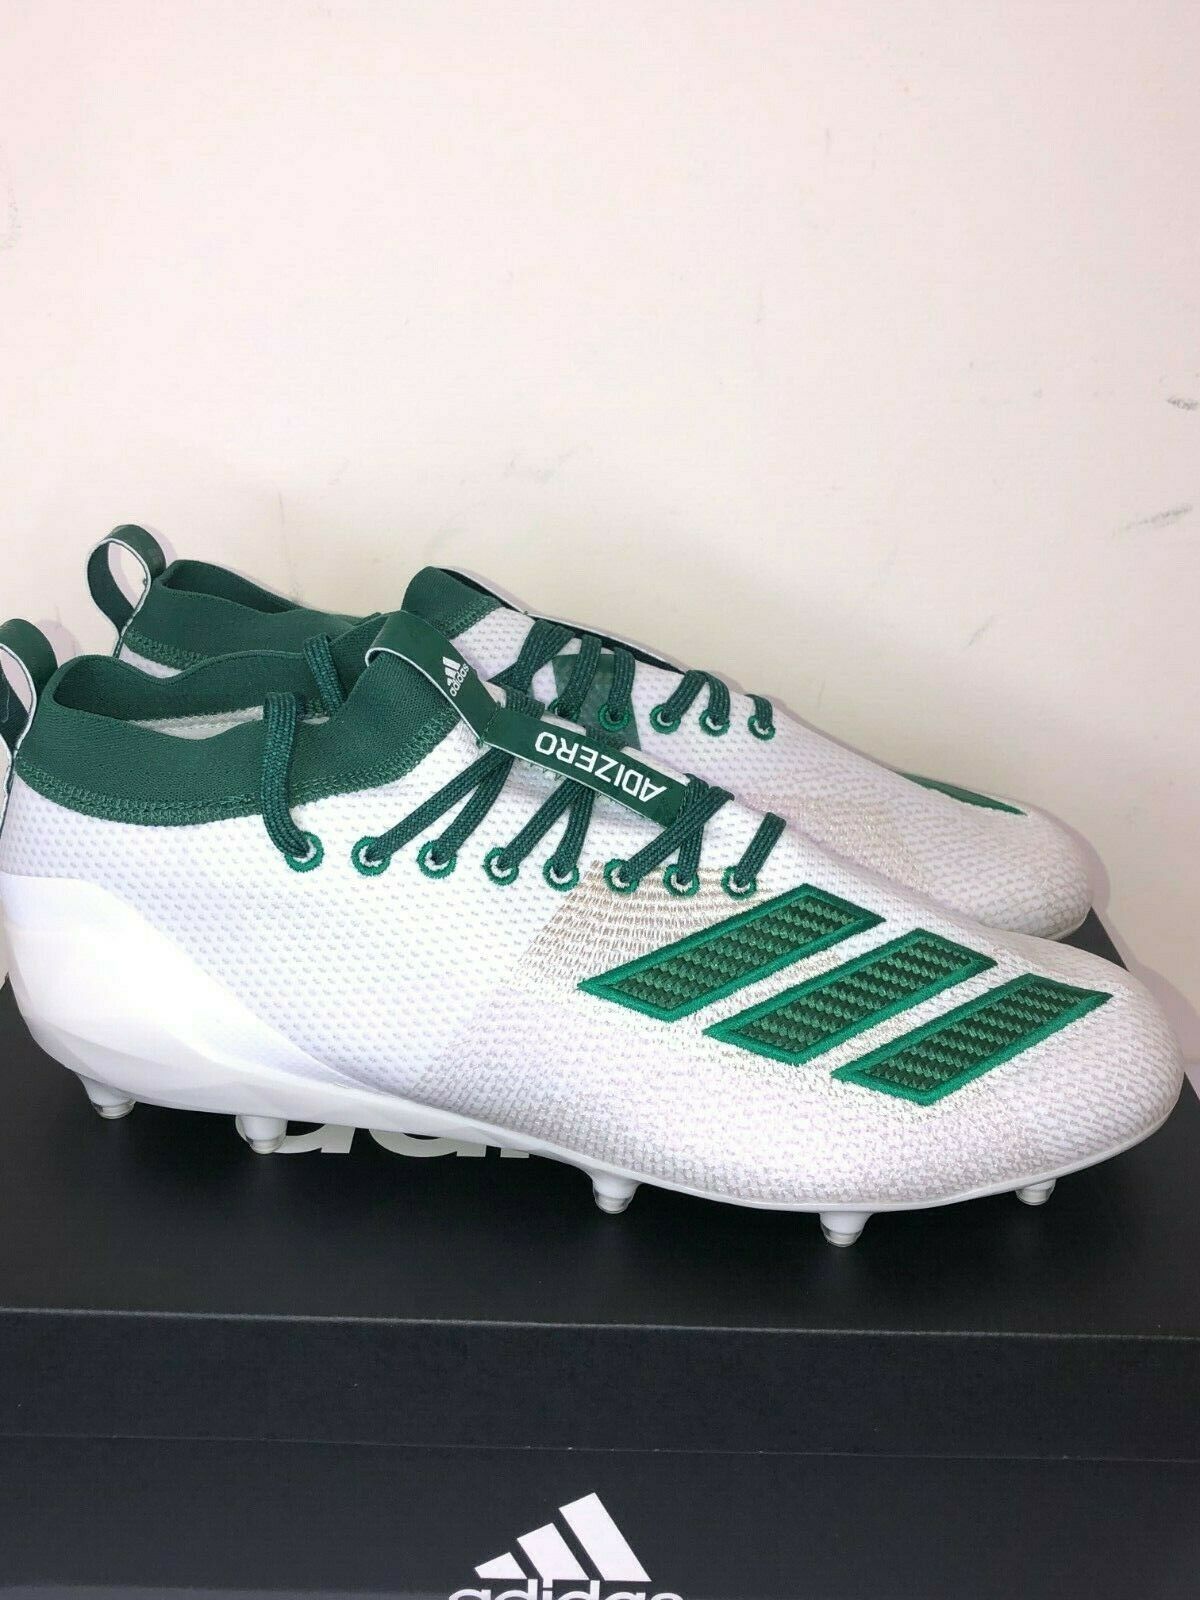 Adidas Adizero 8.0 White/Green Football cleats size 13.5 - Athletic